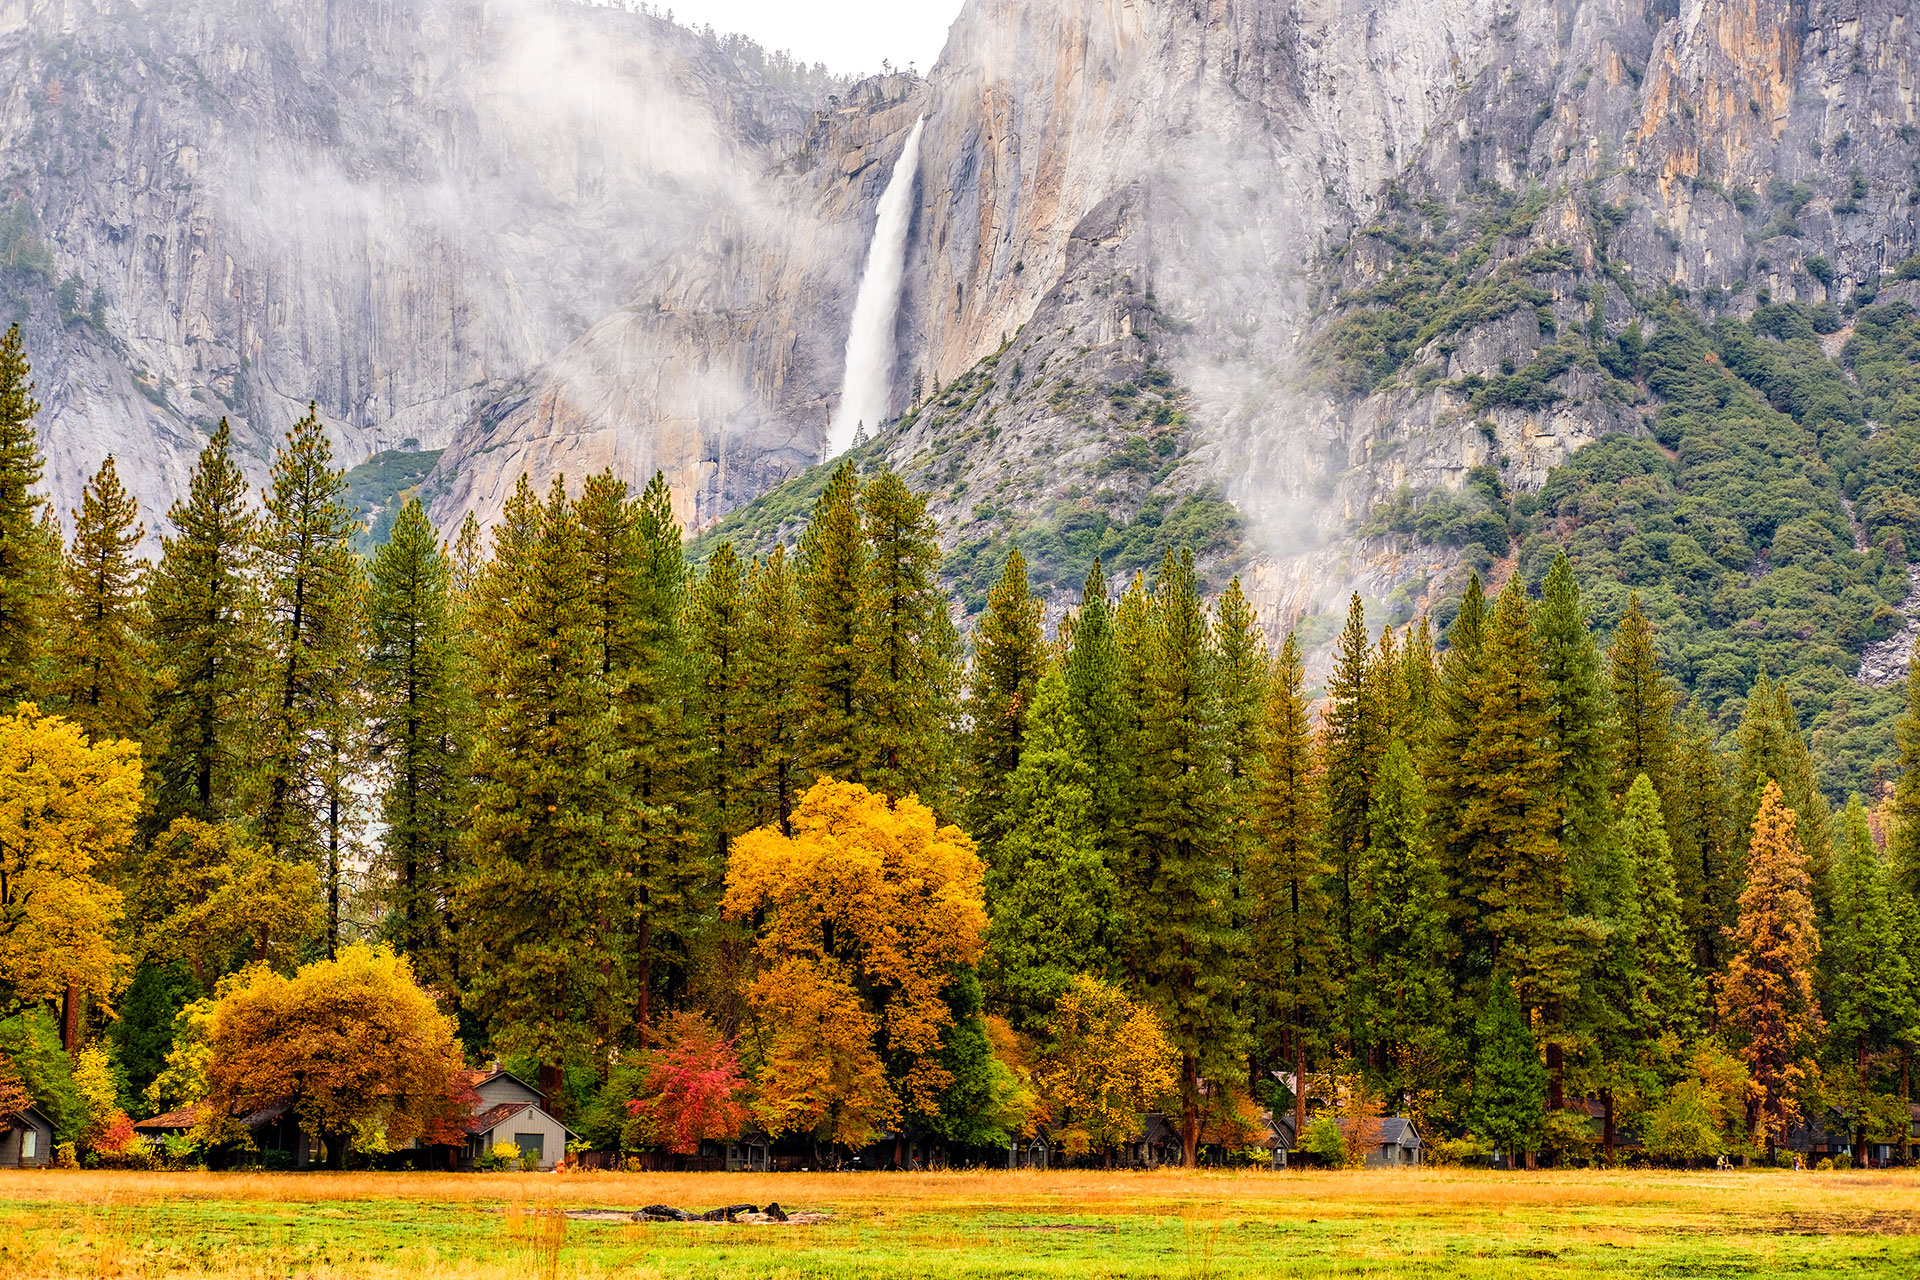 Yosemite Falls at Yosemite National Park; Courtesy of haveseen/Shutterstock.com